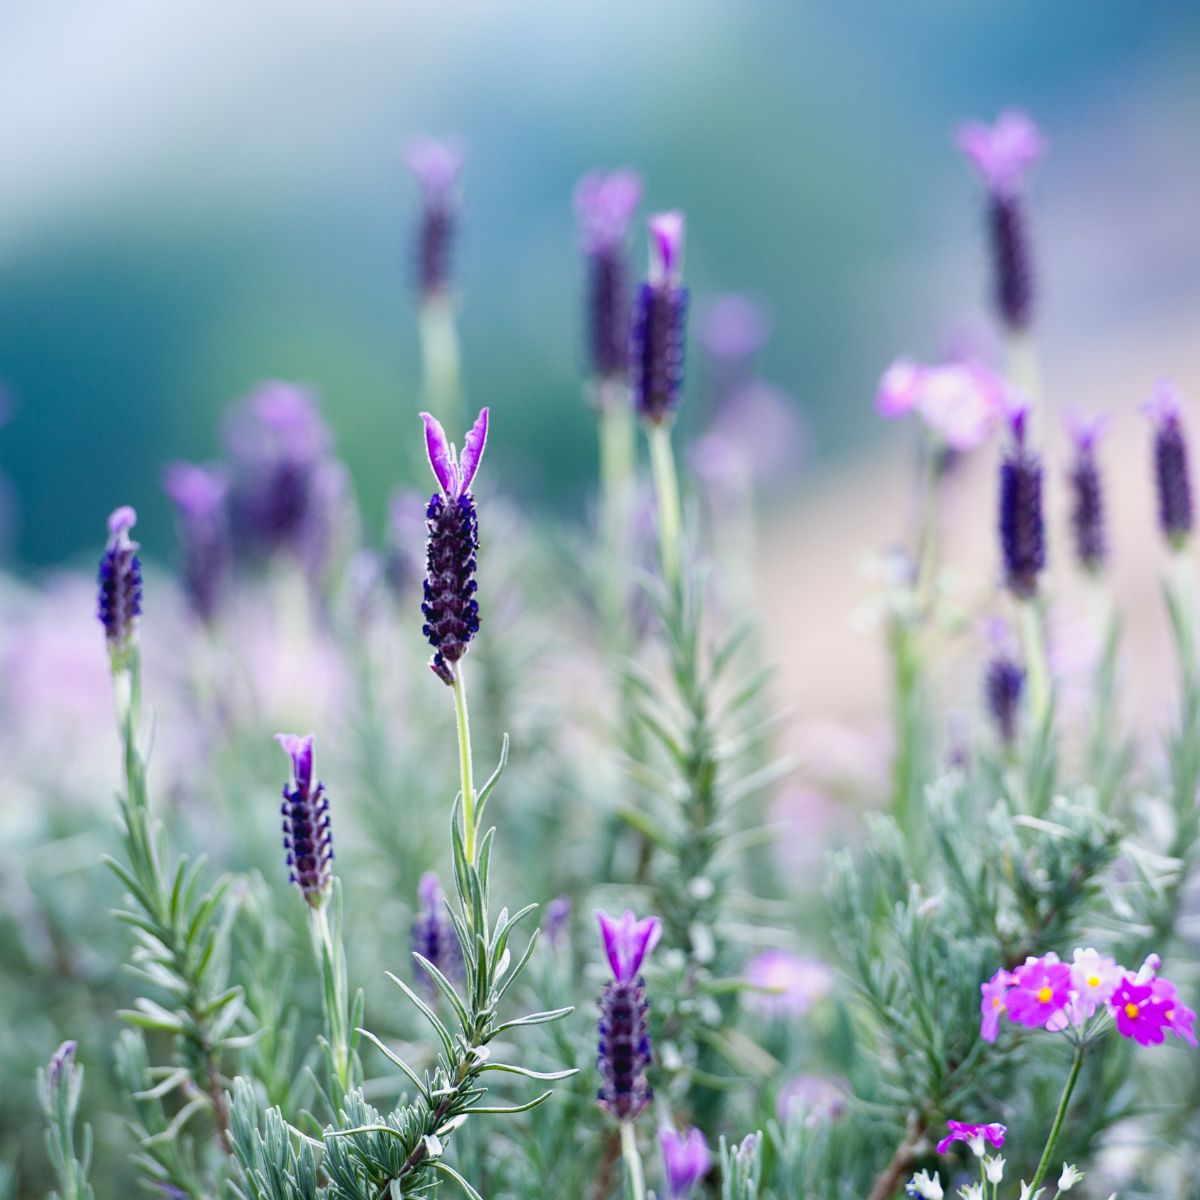 Dainty Spanish lavender flowers. 